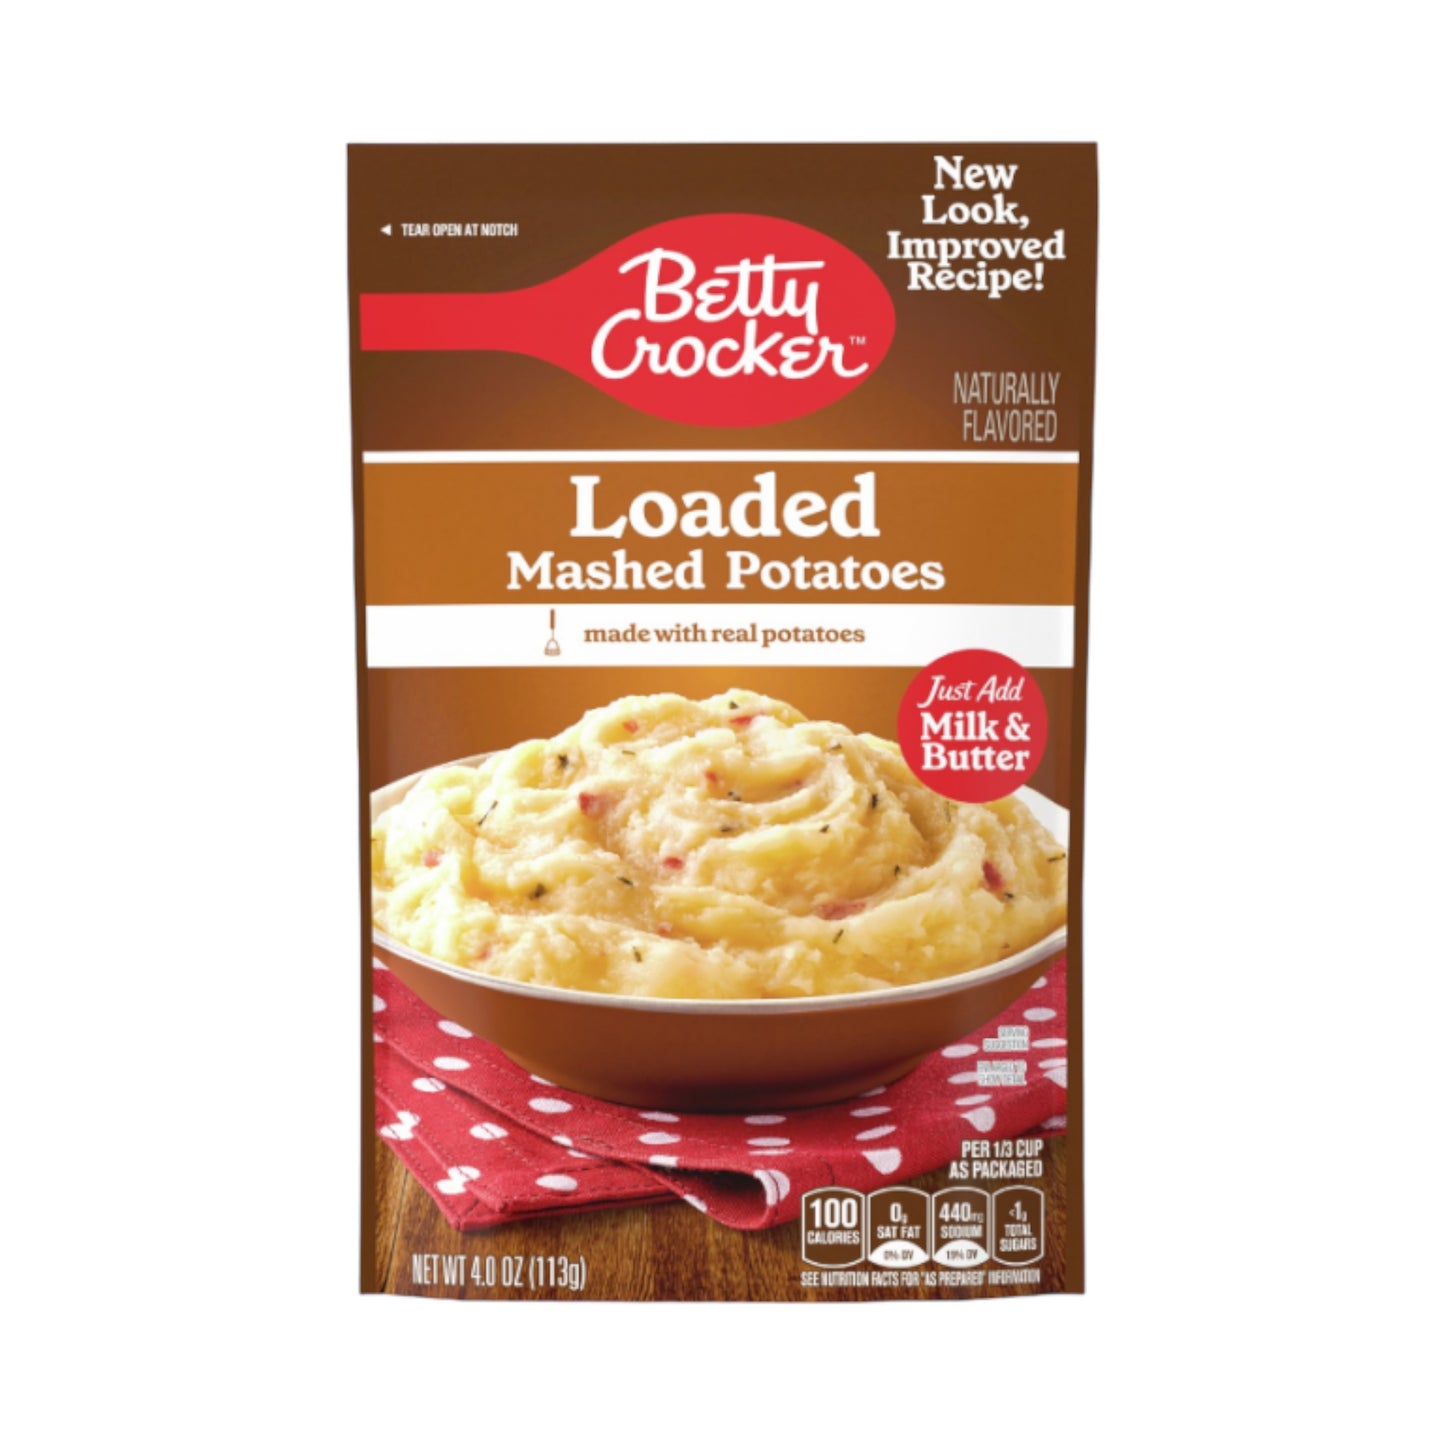 Betty Crocker Loaded Mashed Potatoes - 4oz (113g)